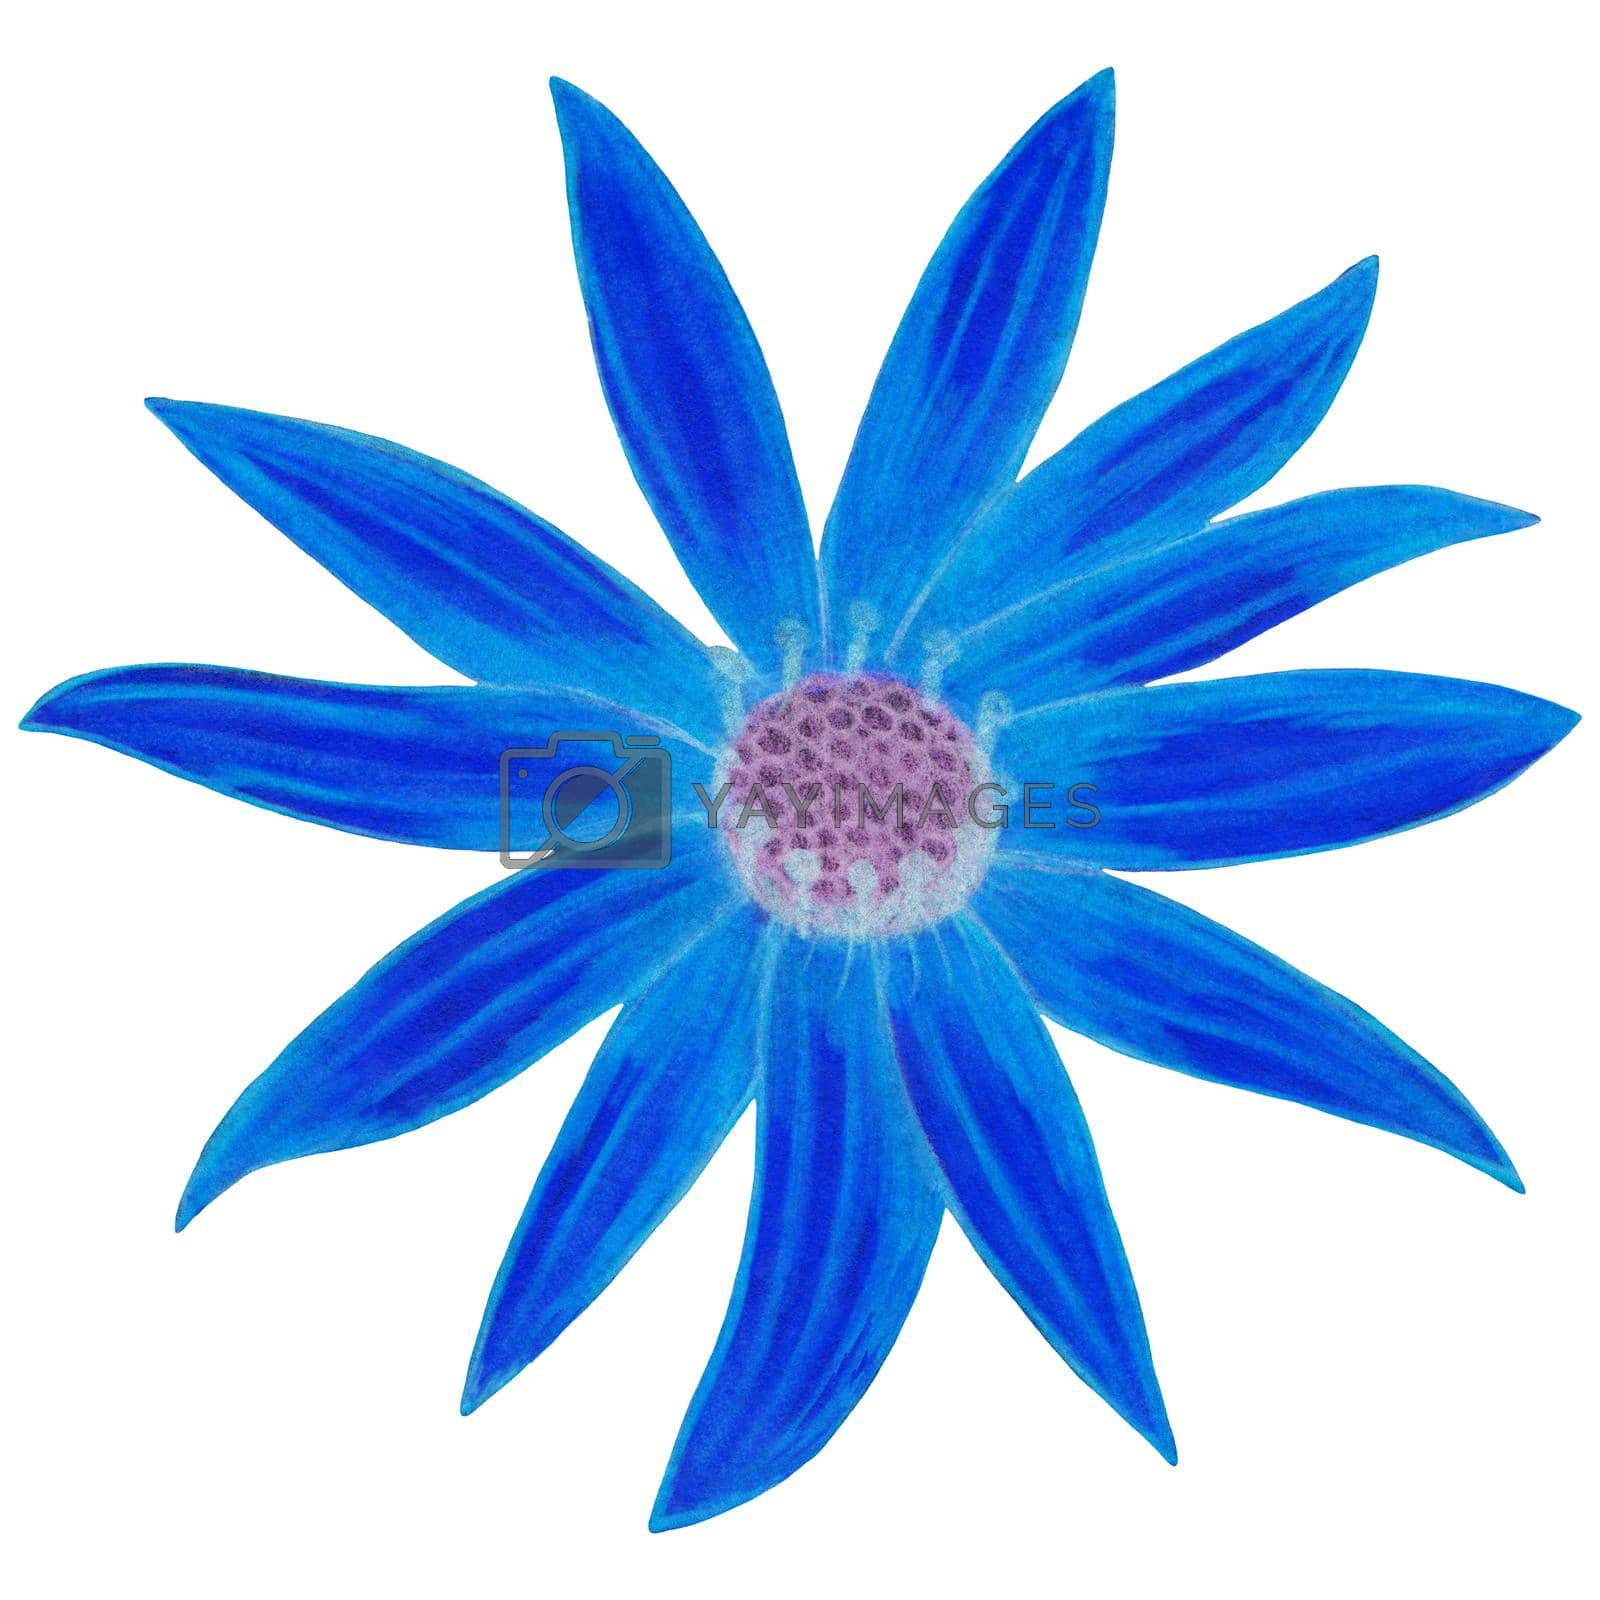 Royalty free image of Hand Drawn Blue Topinambur Isolated on White Background. by Rina_Dozornaya